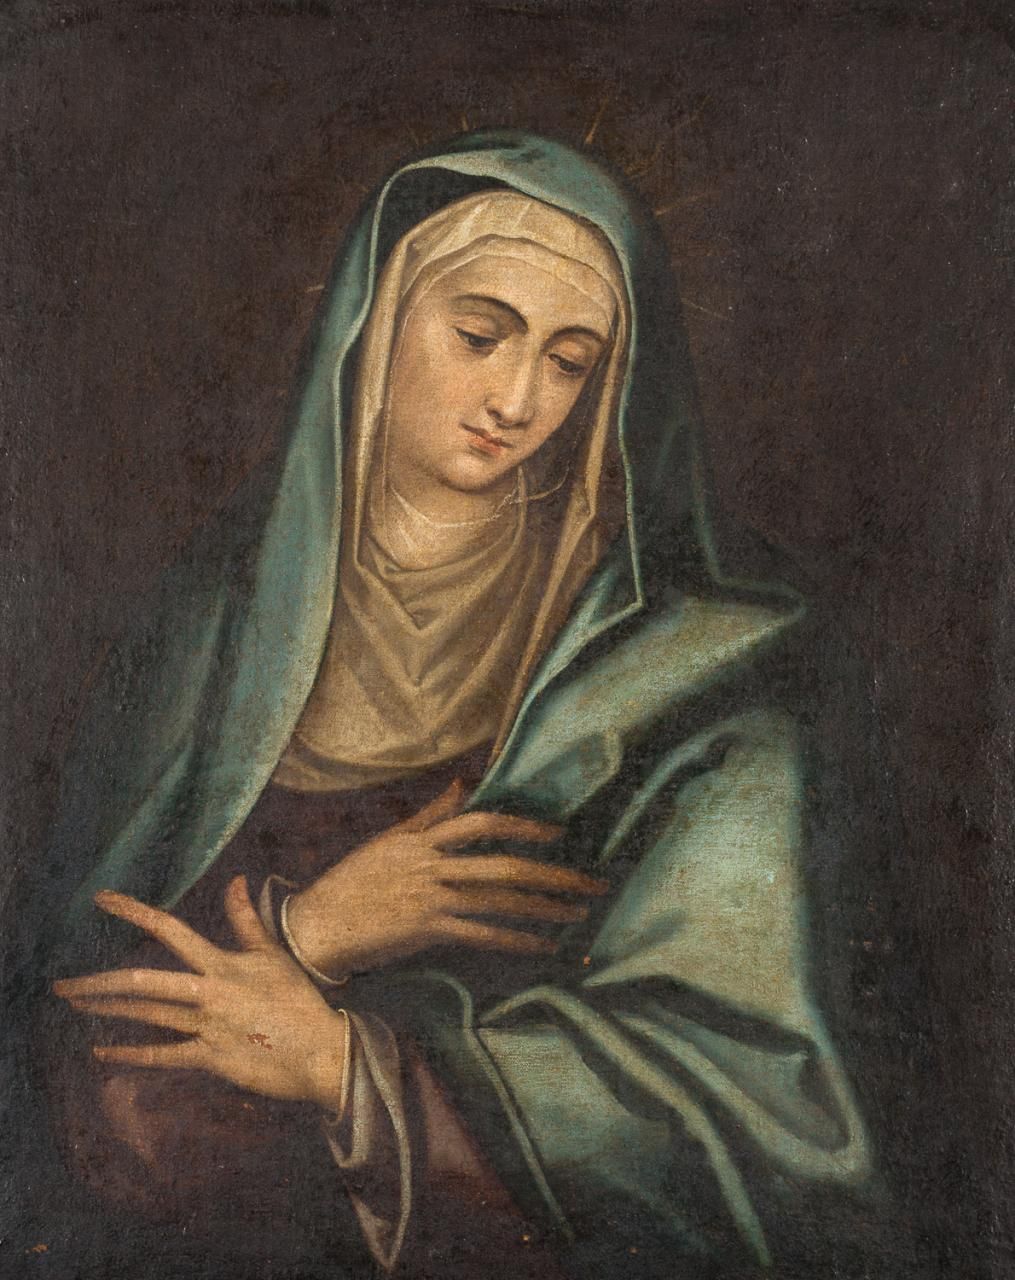 ESCUELA ESPAÑOLA, Fns. S. XVII Our Lady of Sorrows
Oil on canvas
91 x 76 cm